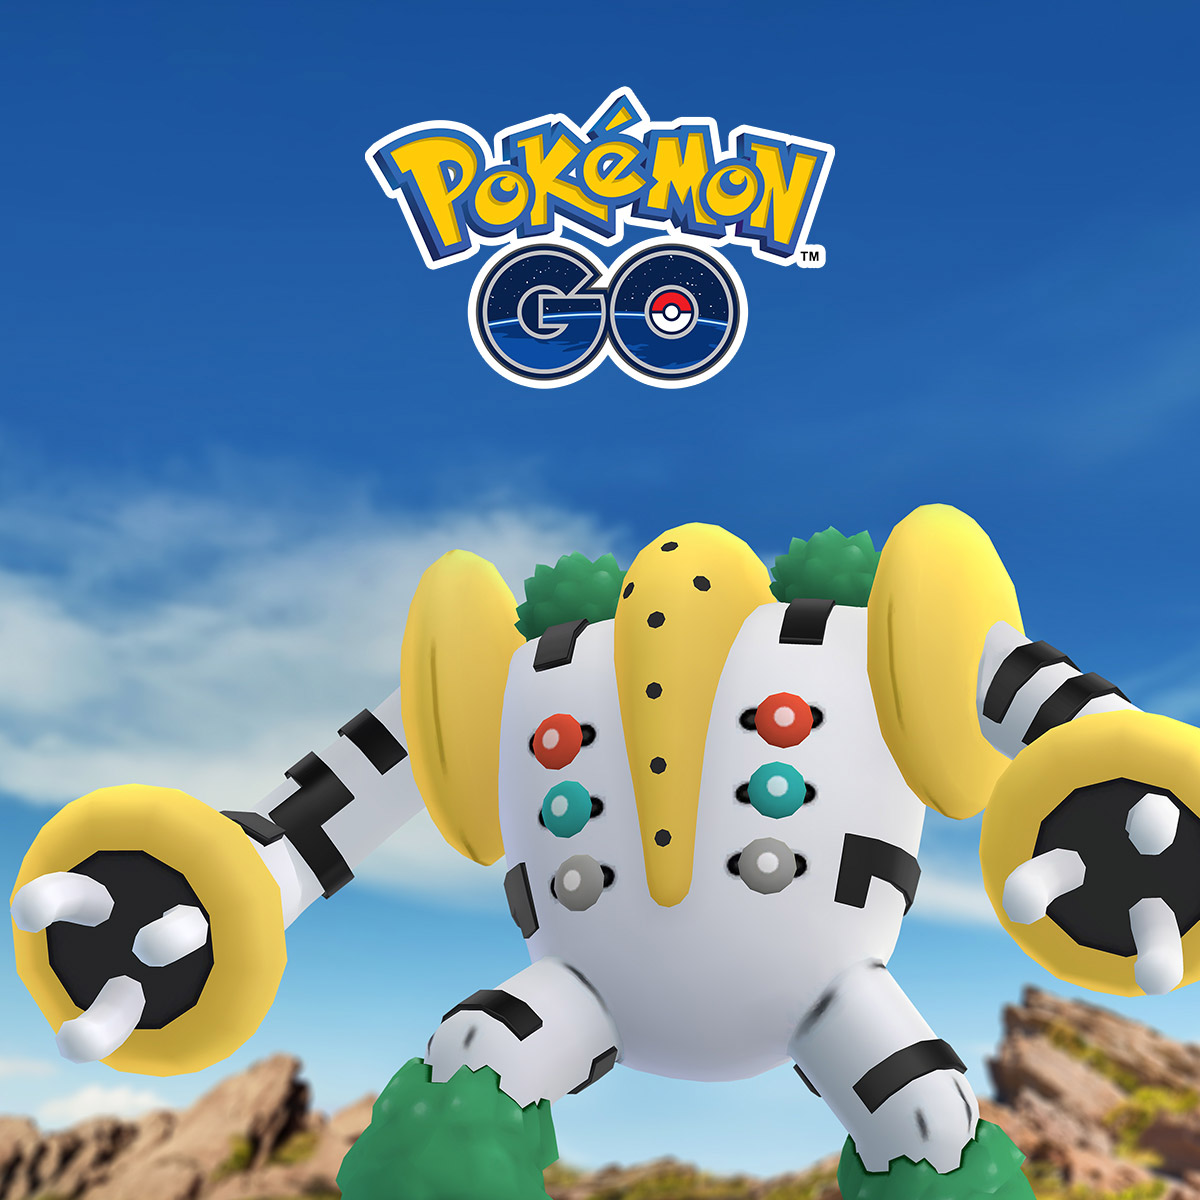 Regigigas Pokémon GO EX Raid Battle 